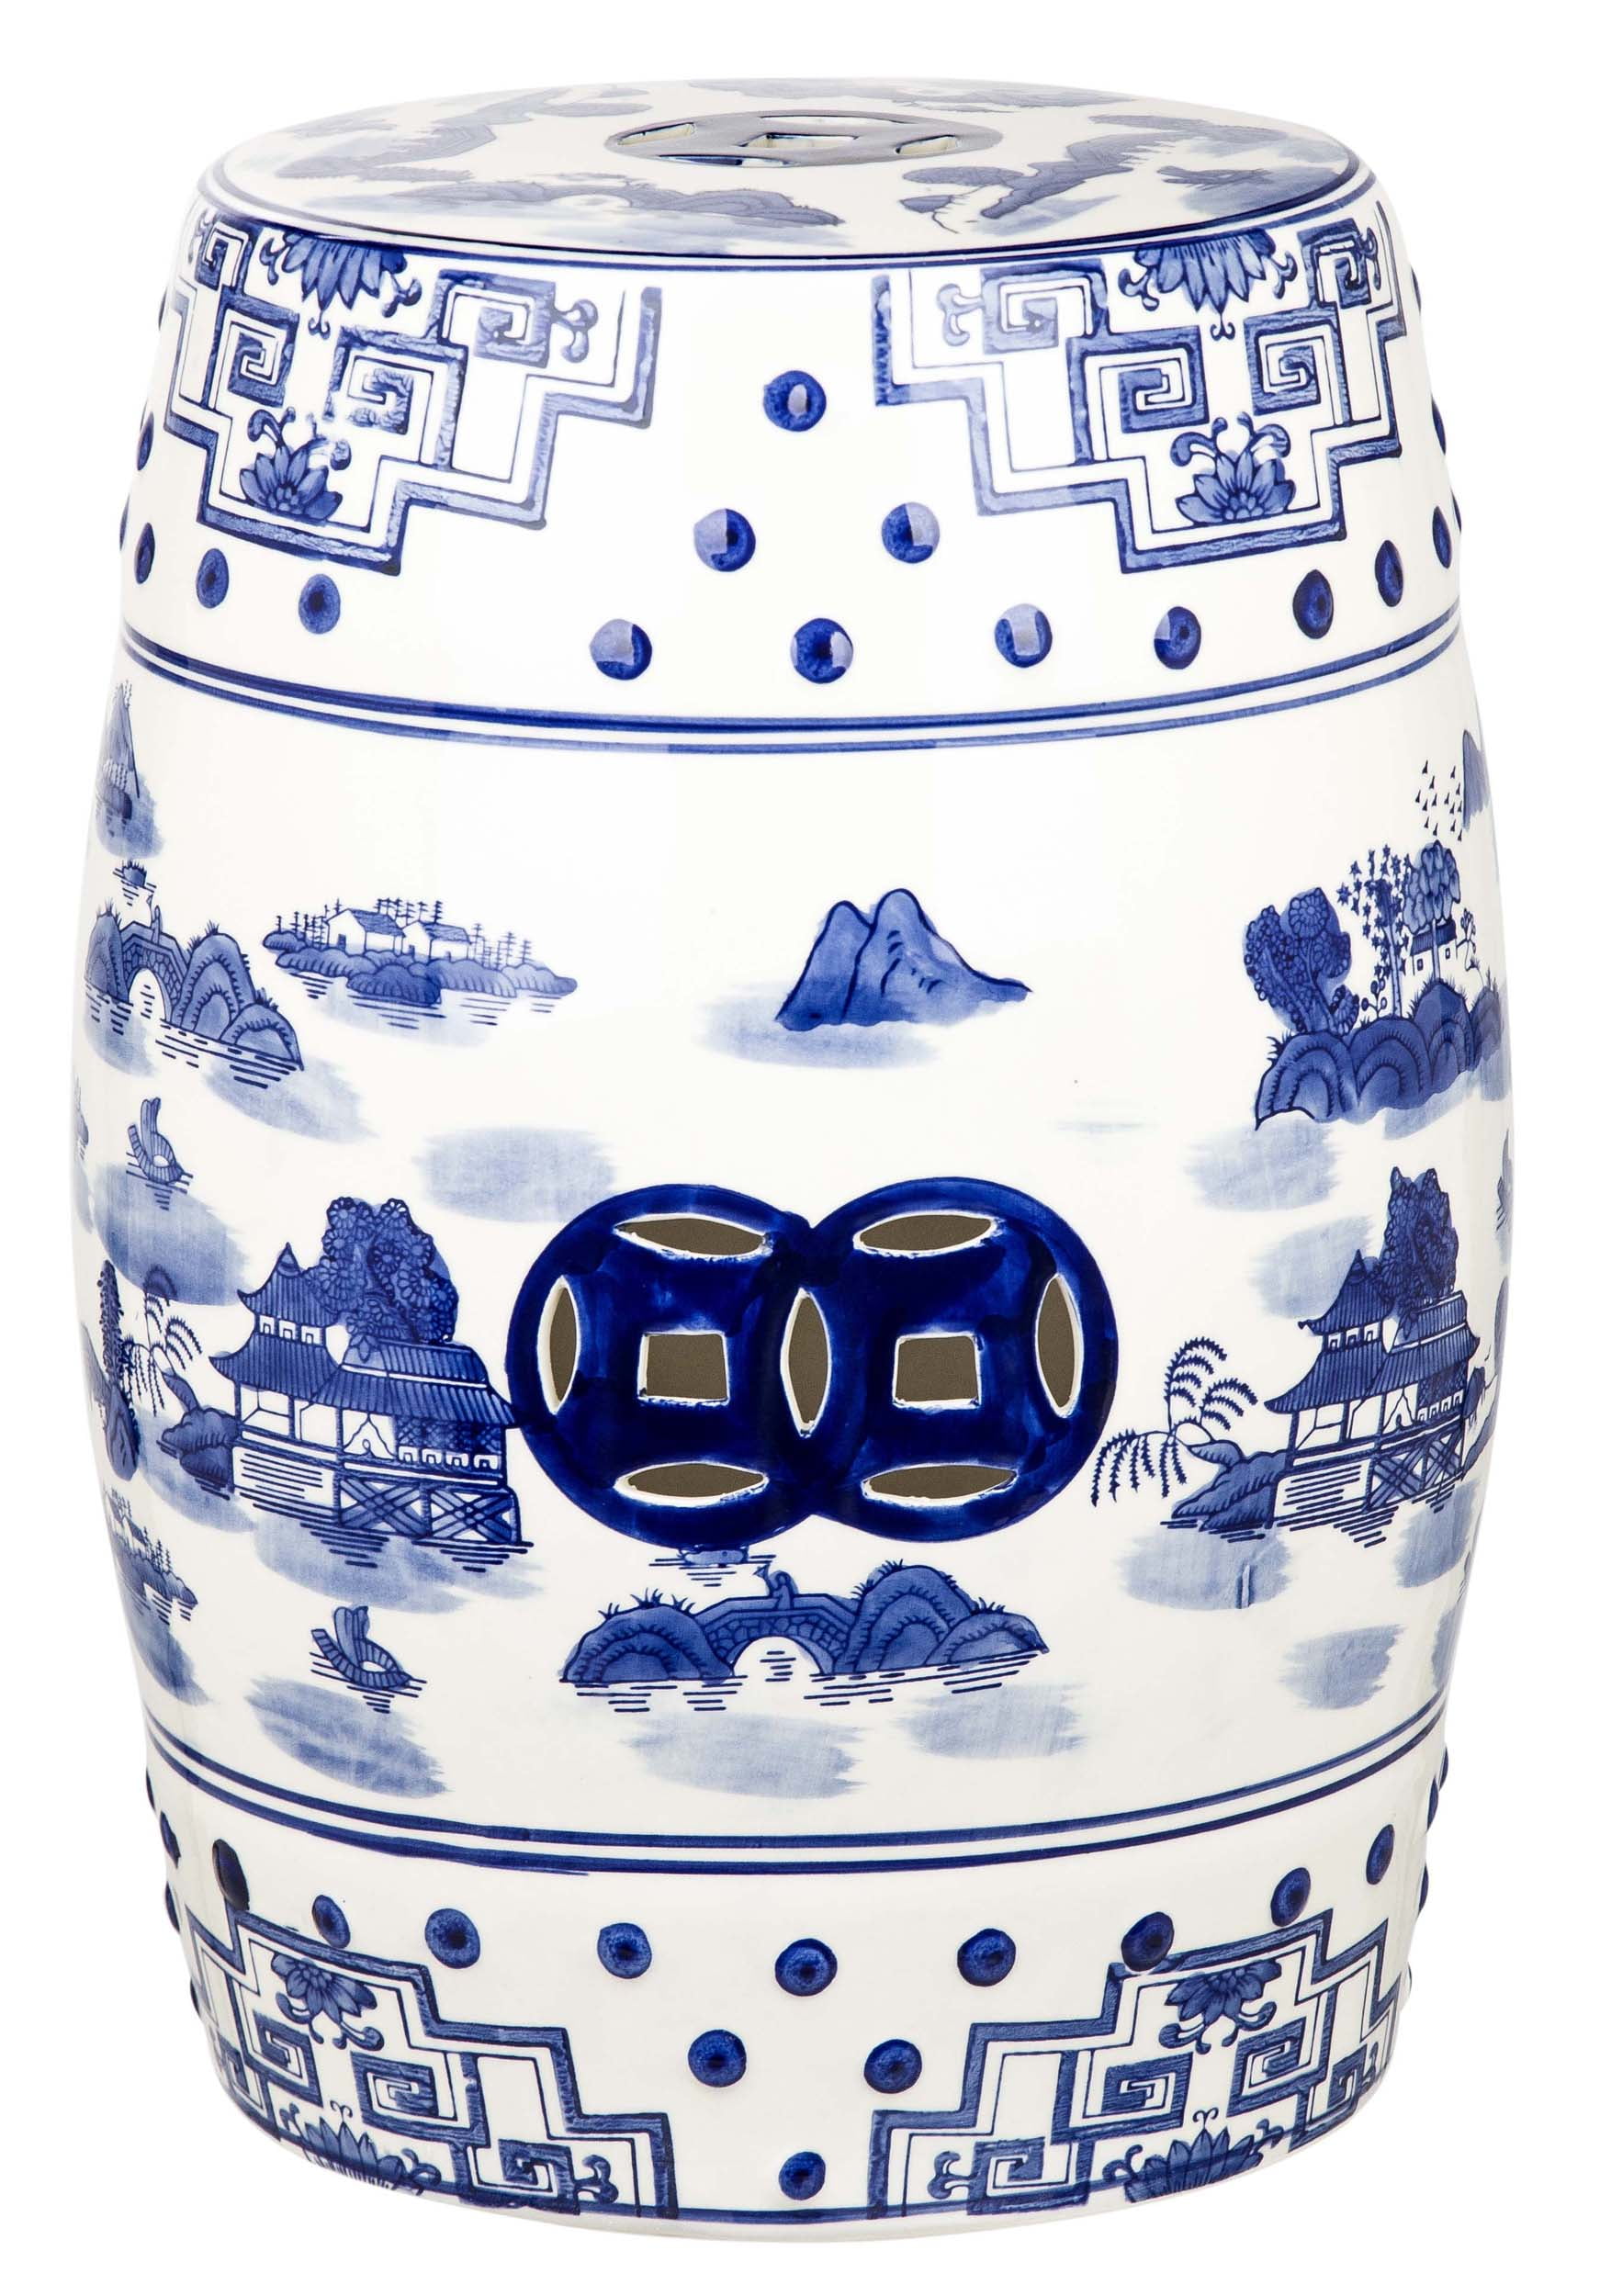 Safavieh Dragon S Breath Chinoiserie, Safavieh Tao Ceramic Decorative Garden Stool Blue And White